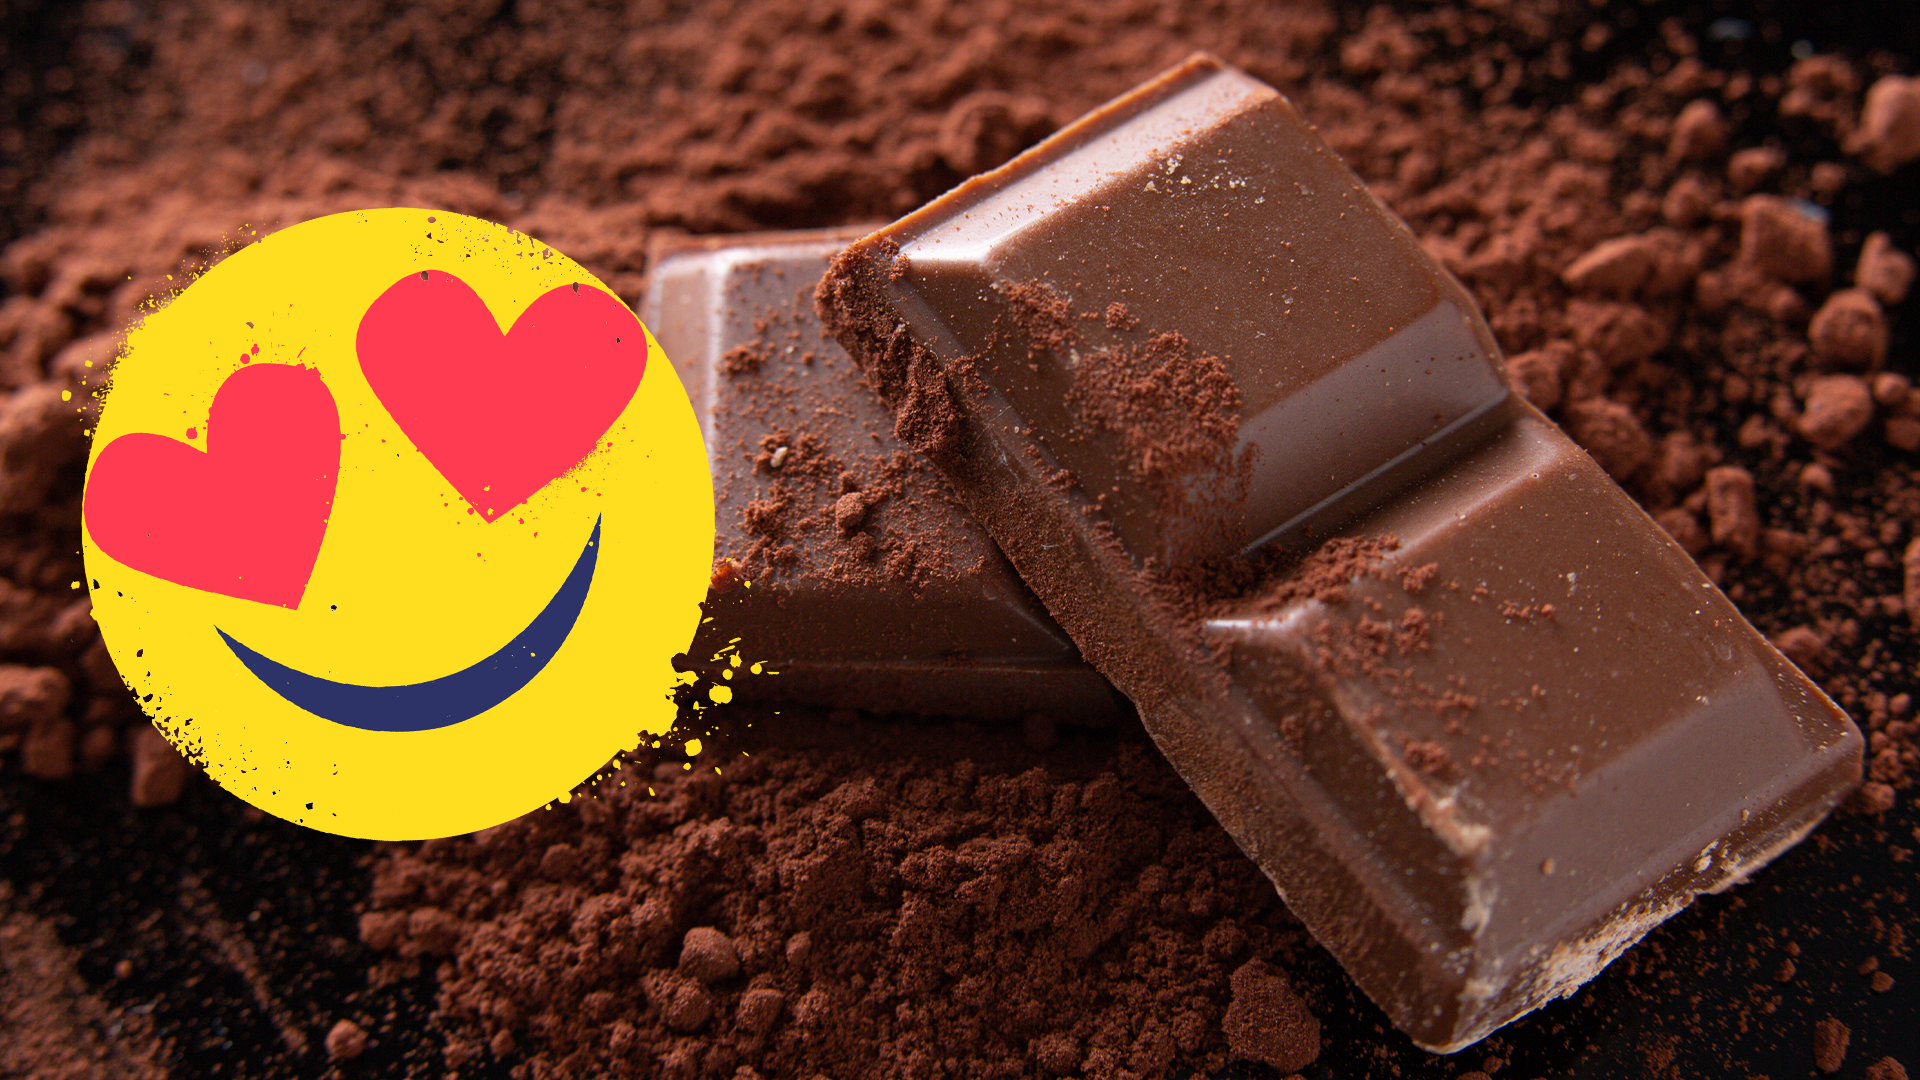 Chocolate with heart eyes emoji 